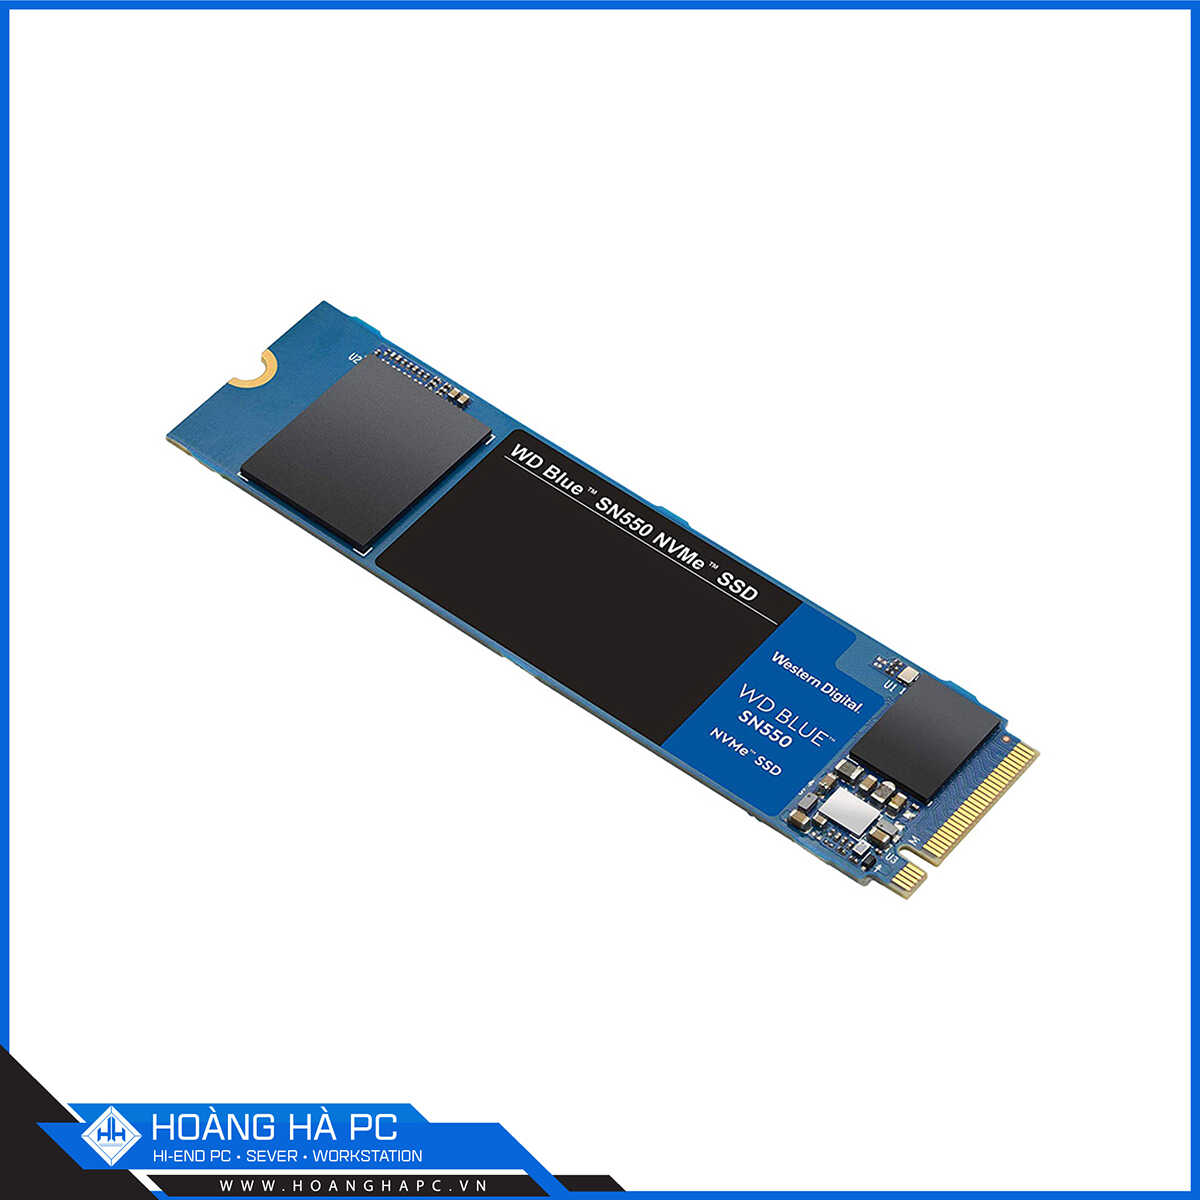 SSD WD SN550 Blue 500GB